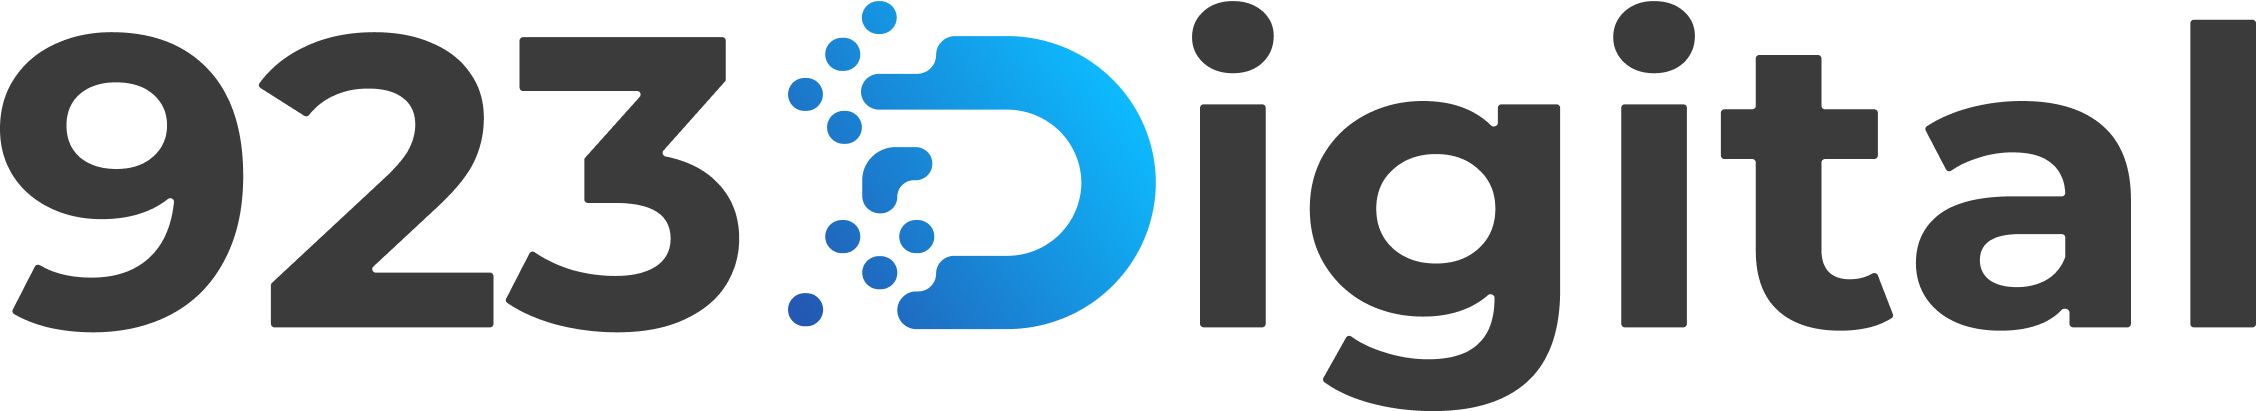 Логотип компании «923 Digital»